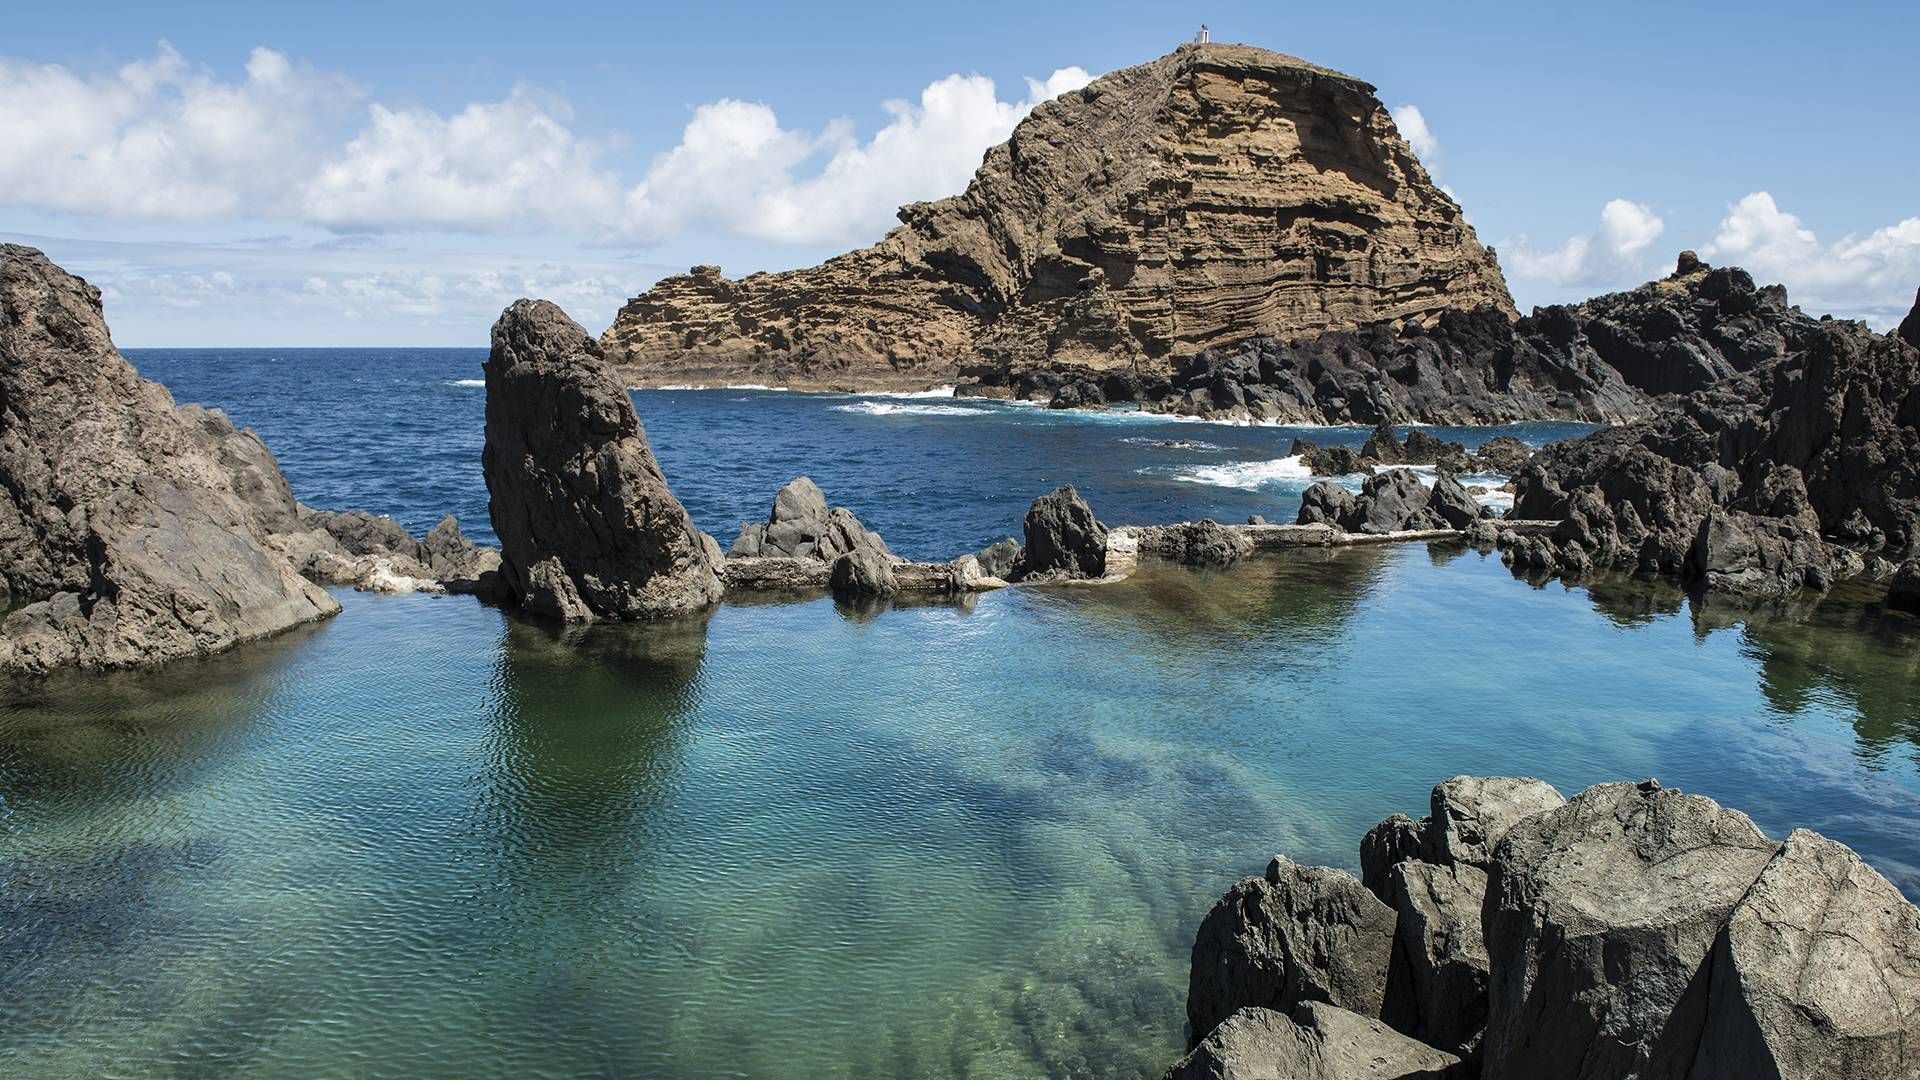 Madeira travels, Beautiful north coast, Stunning scenery, Pin-worthy, 1920x1080 Full HD Desktop